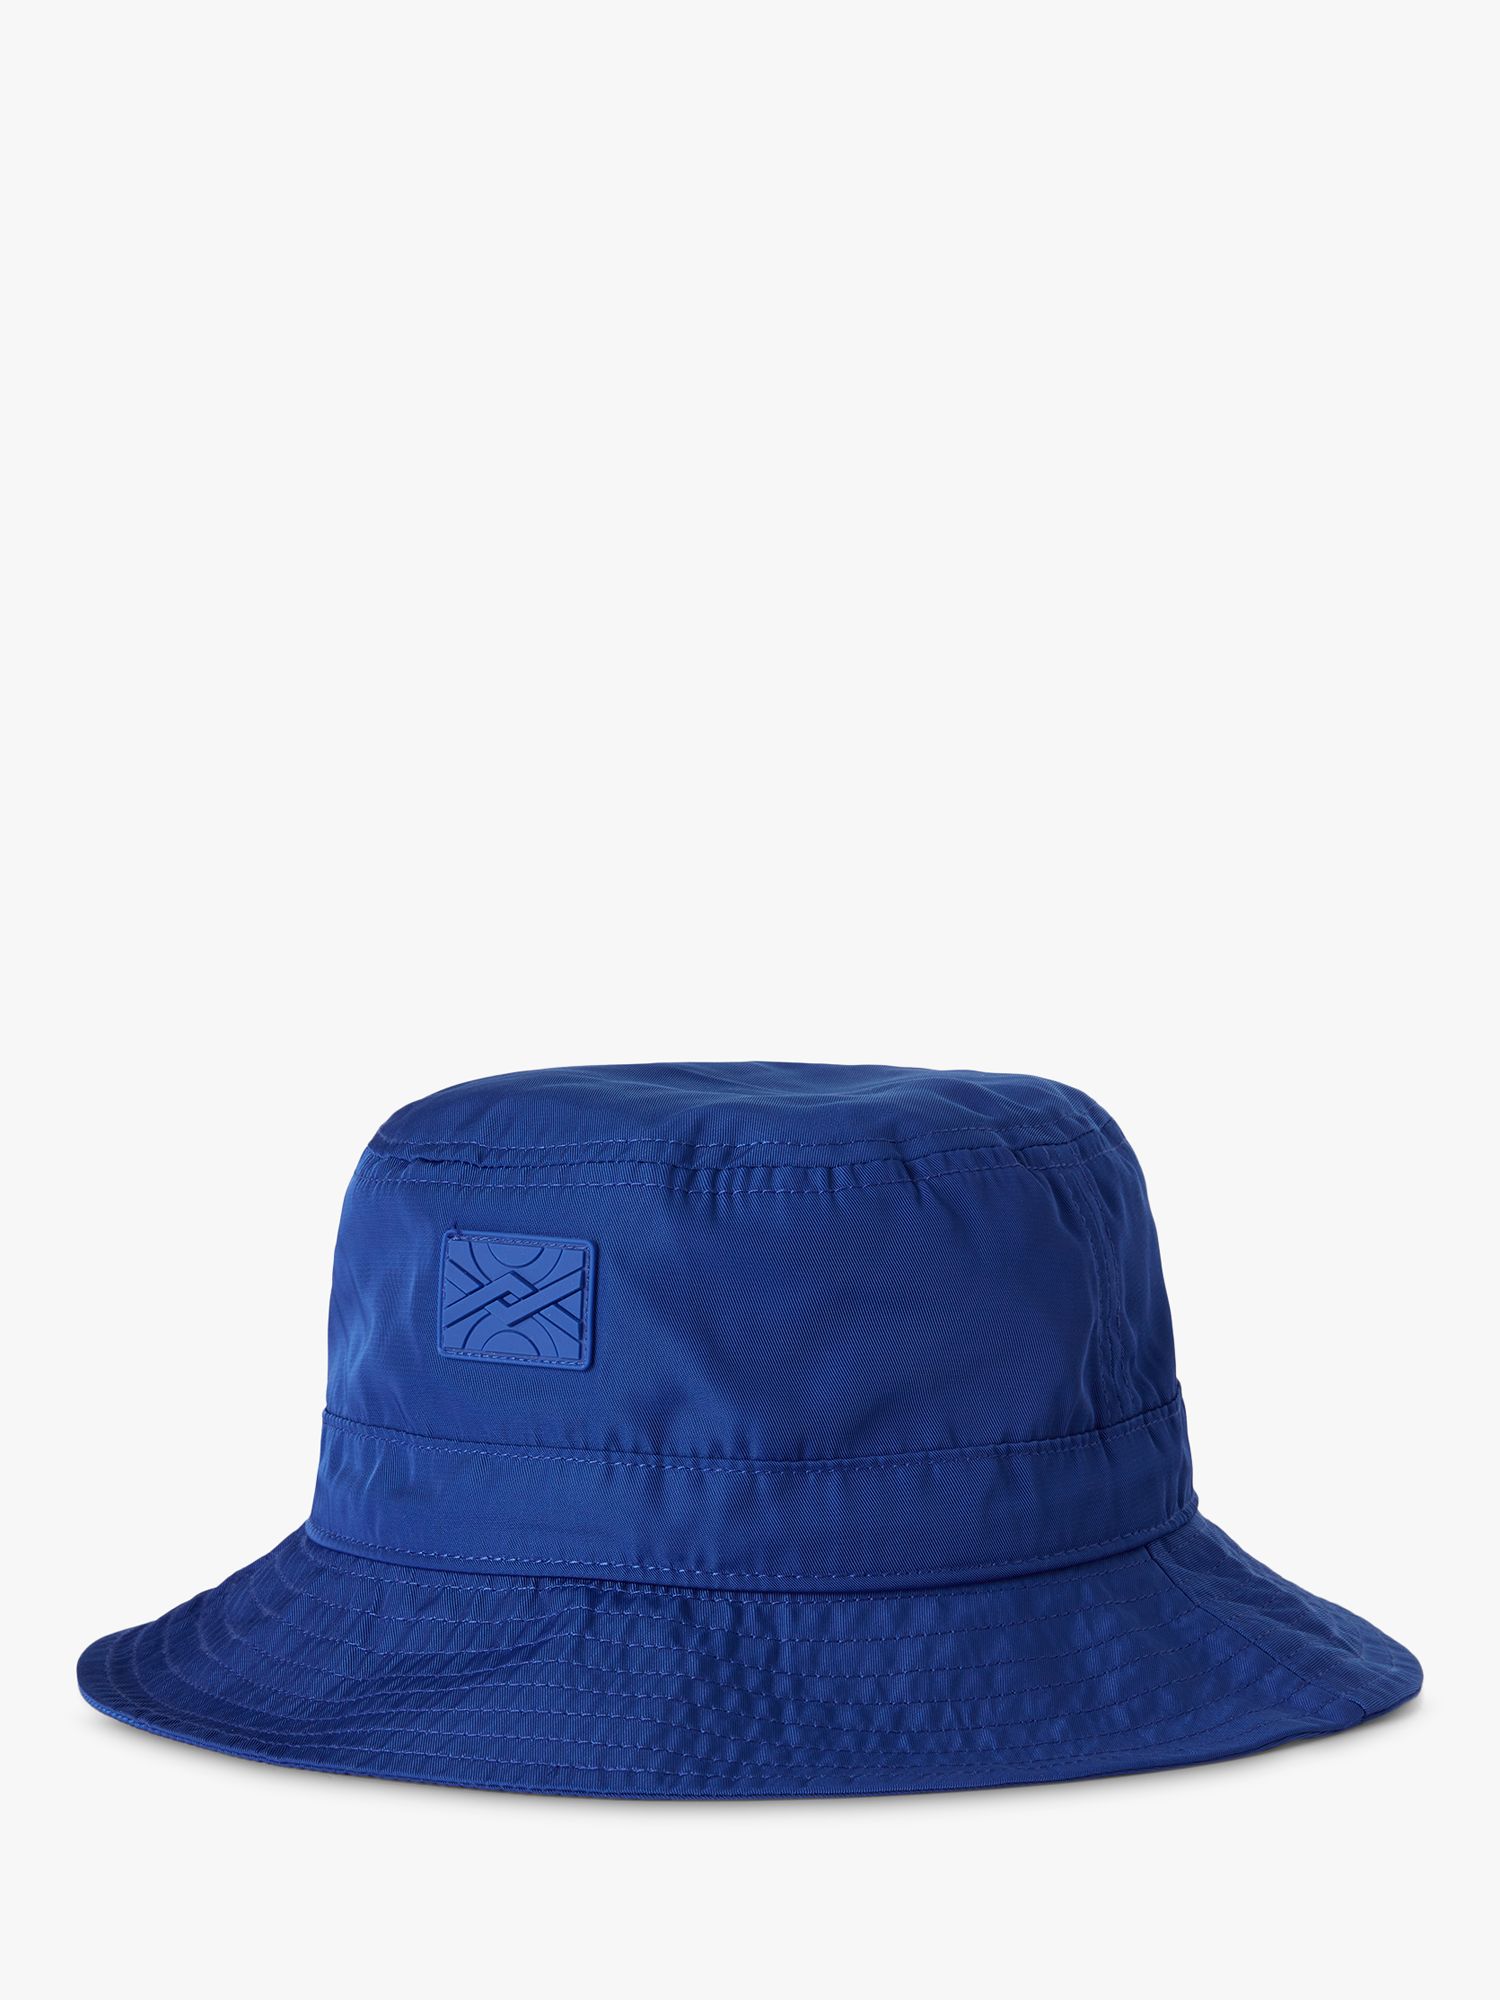 Benetton Kids' Logo Badge Bucket Hat, Bluette, S